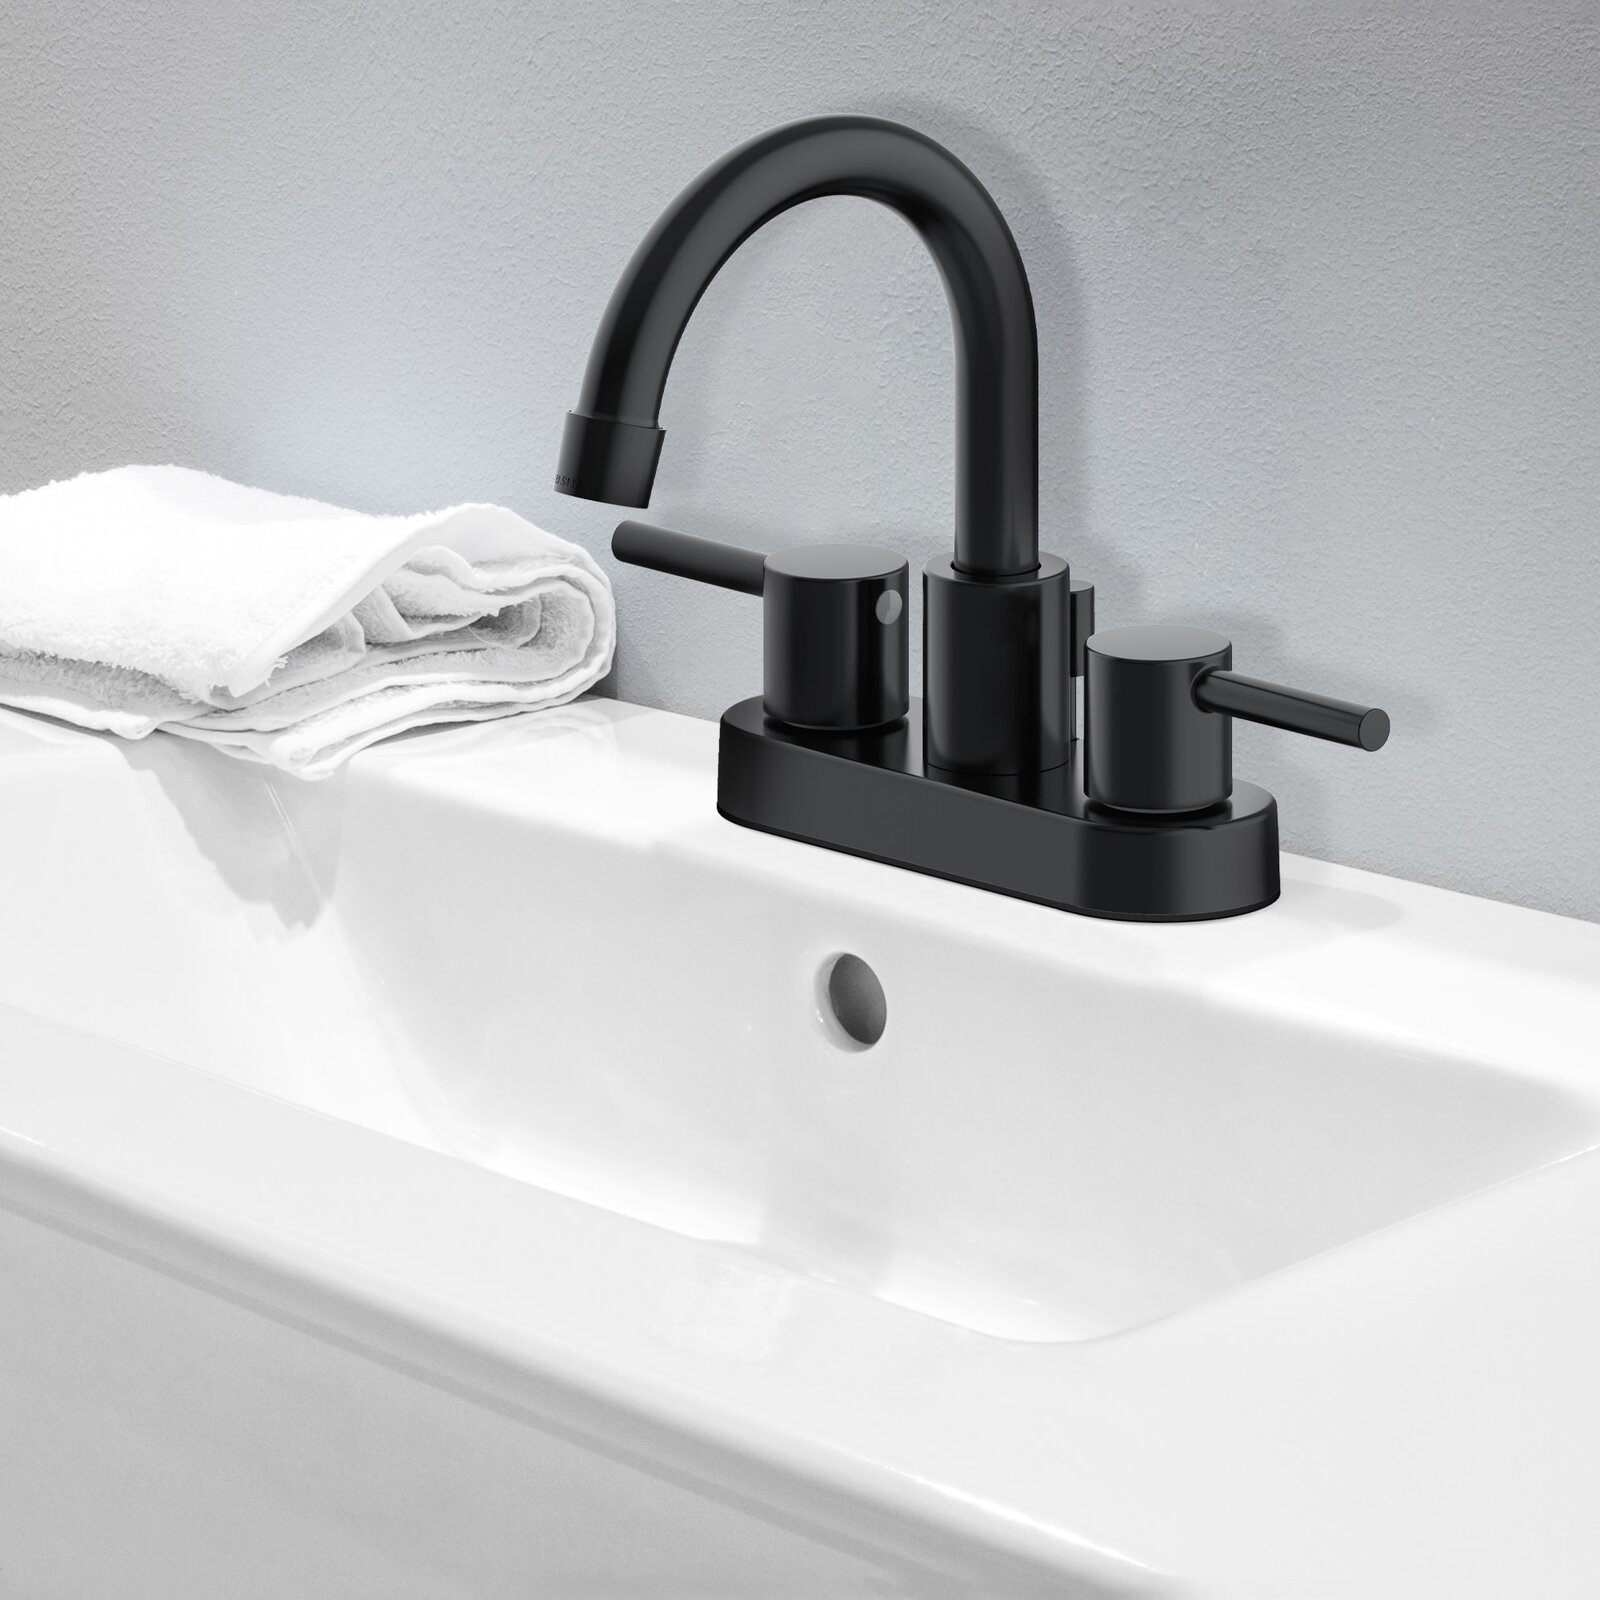 La migliore vendita Fashion Faucet Basin Sanitary Ware Bathroom 8 Inch Wide Spread Faucet